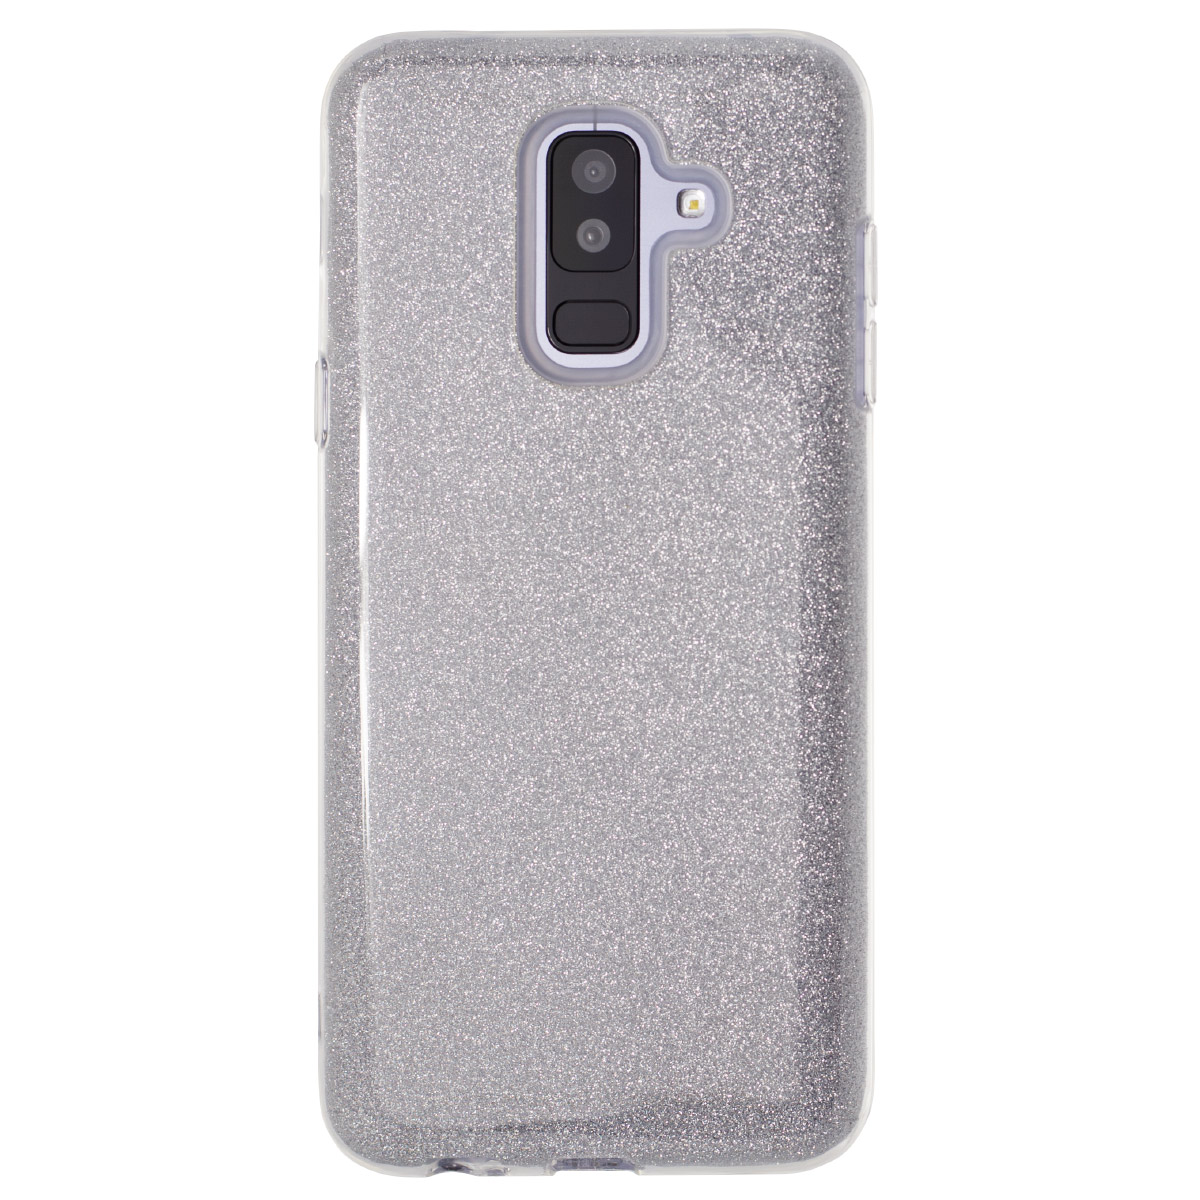 Husa Fashion Samsung Galaxy A6 Plus 2018, Contakt Glitter Argintiu thumb